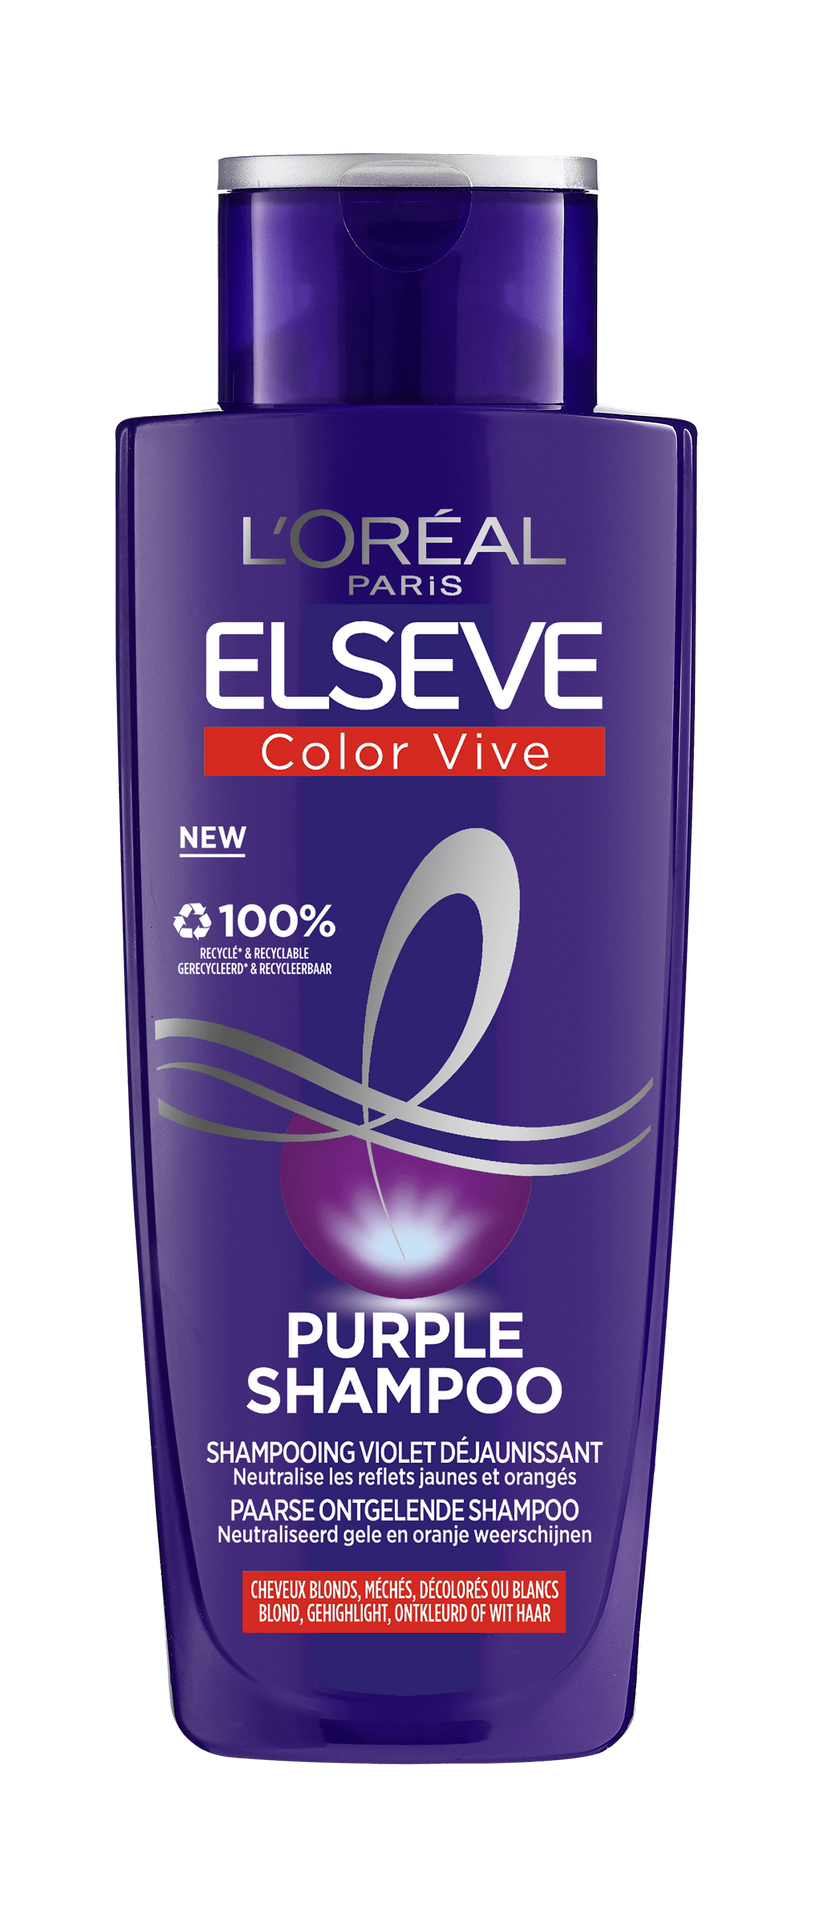 versus Zeebrasem Onrustig Paars ontgelende shampoo|Color Vive Purple - L'Oréal Paris